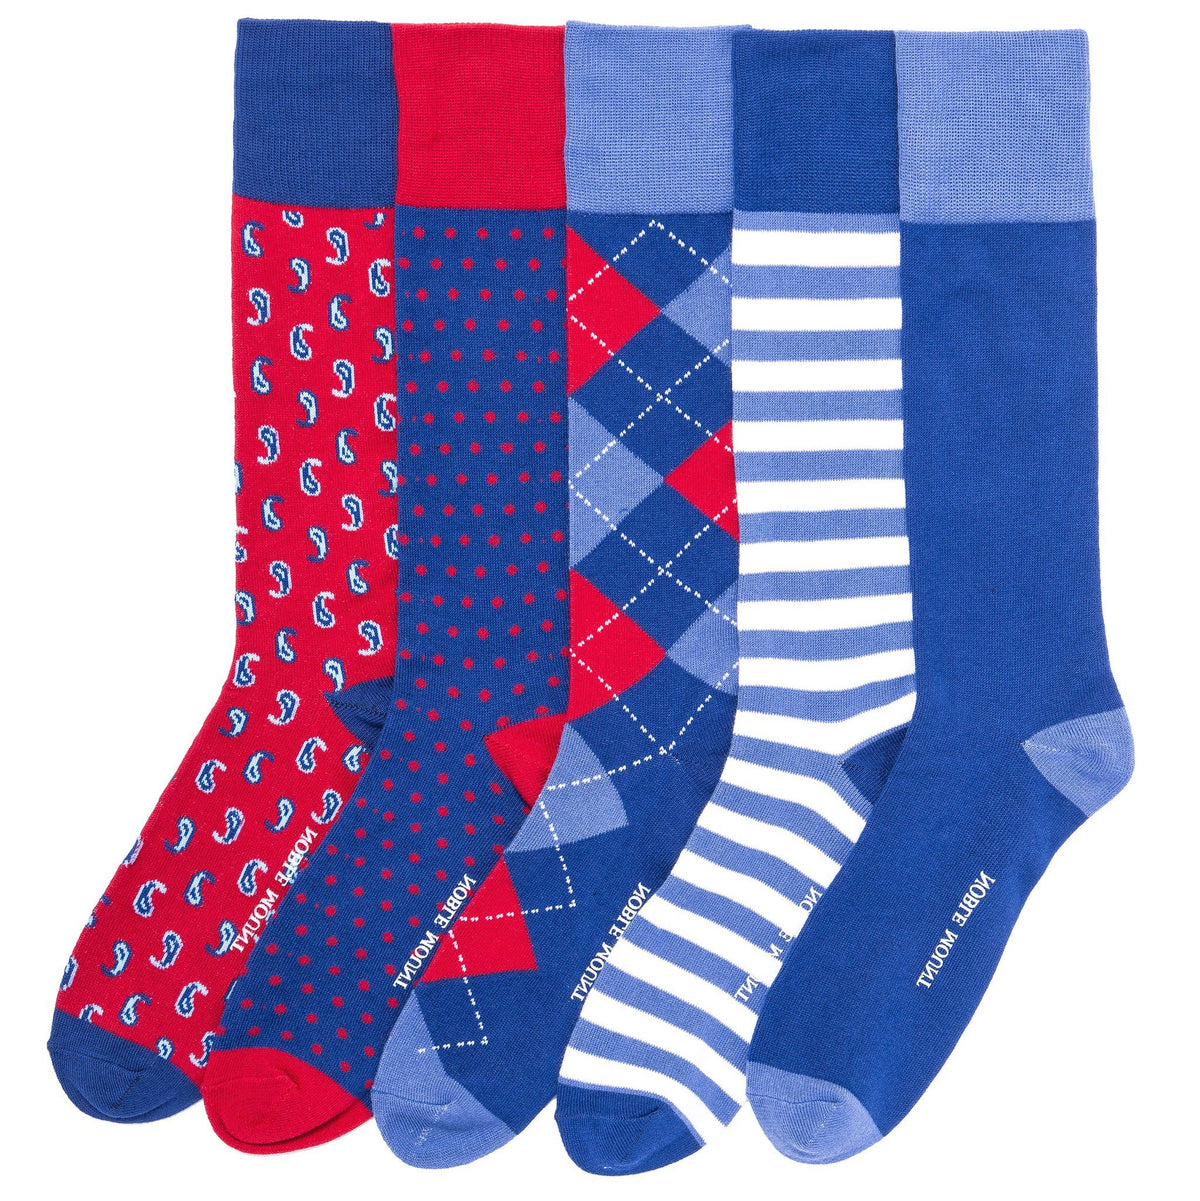 Men's Combed Cotton Weekday Dress Socks 5-Pack - Set A1